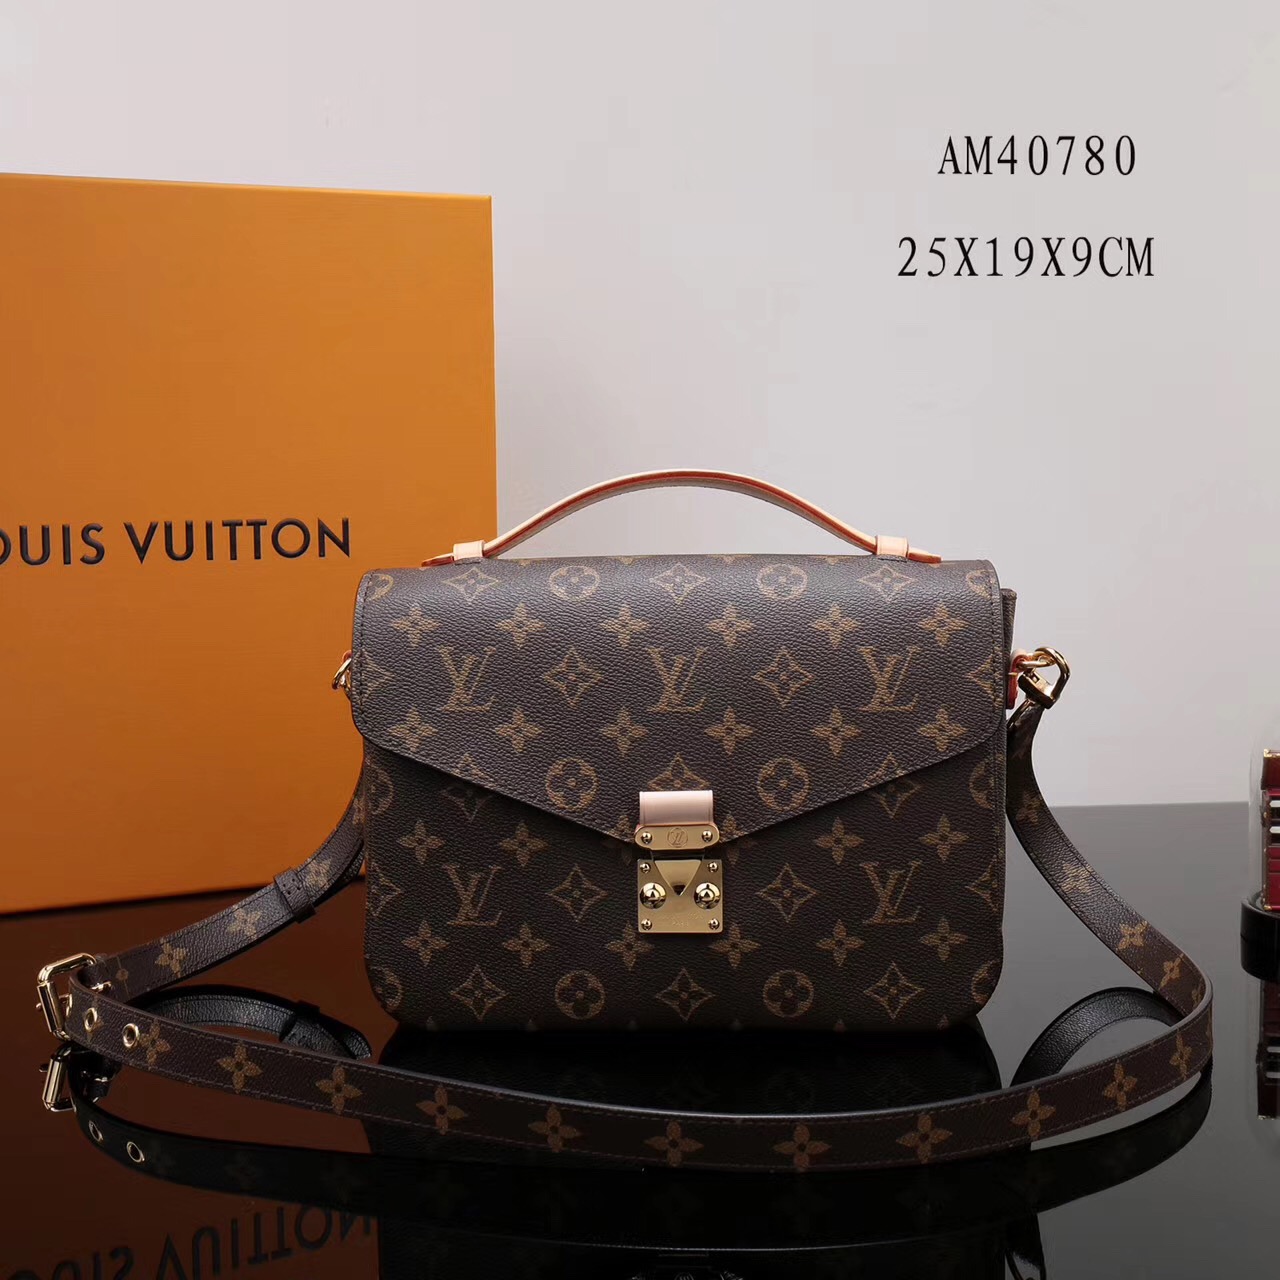 LV Louis Vuitton Pochette AM40780 Metis bags Monogram Handbags